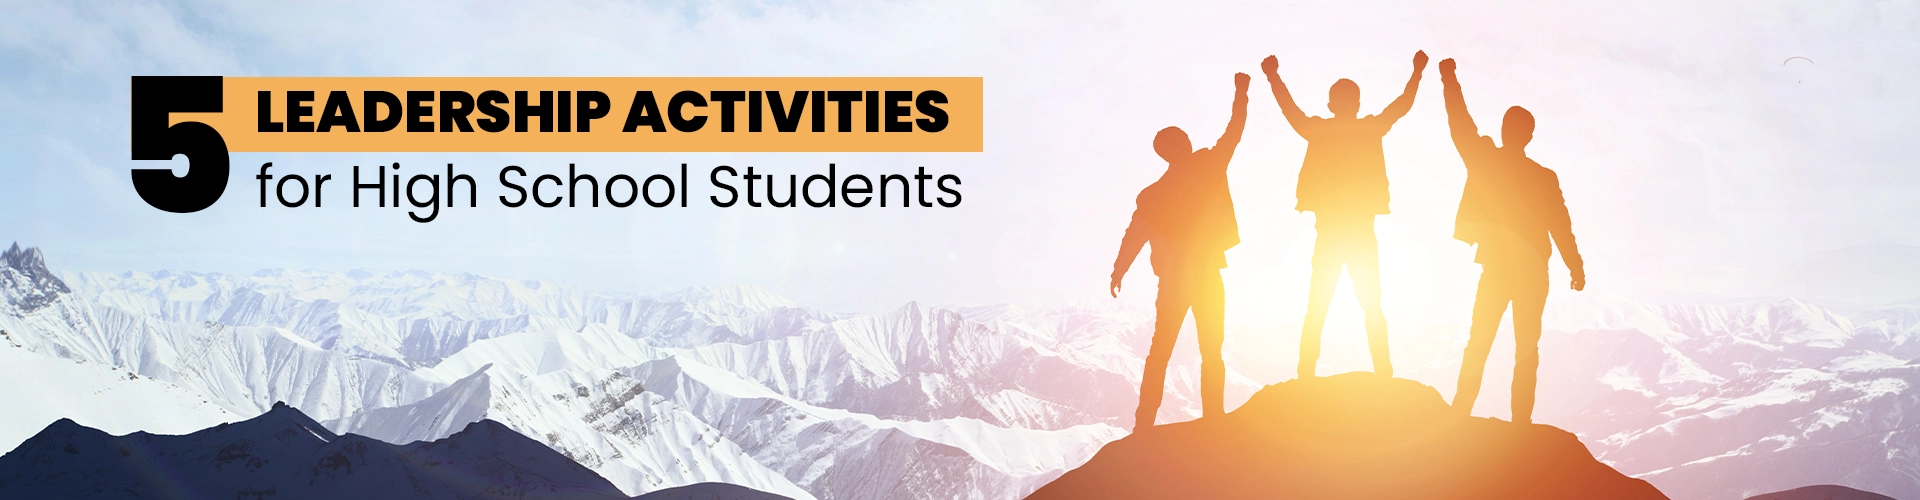 Leadership Activities for High School Students